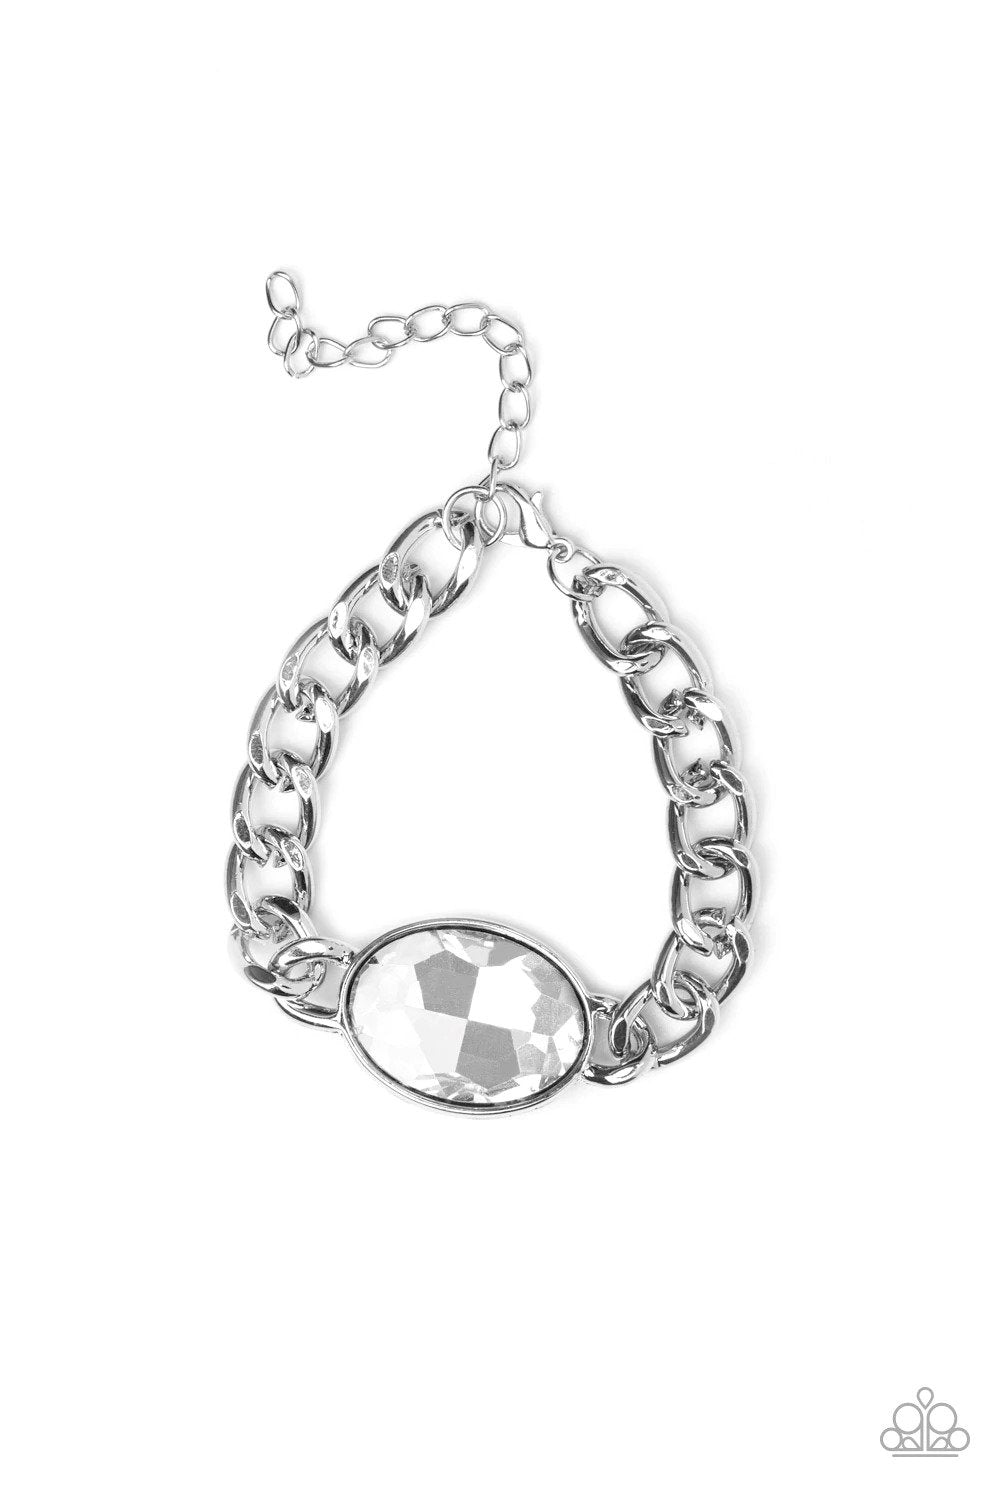 Luxury Lush White Bracelet - Paparazzi Accessories- lightbox - CarasShop.com - $5 Jewelry by Cara Jewels